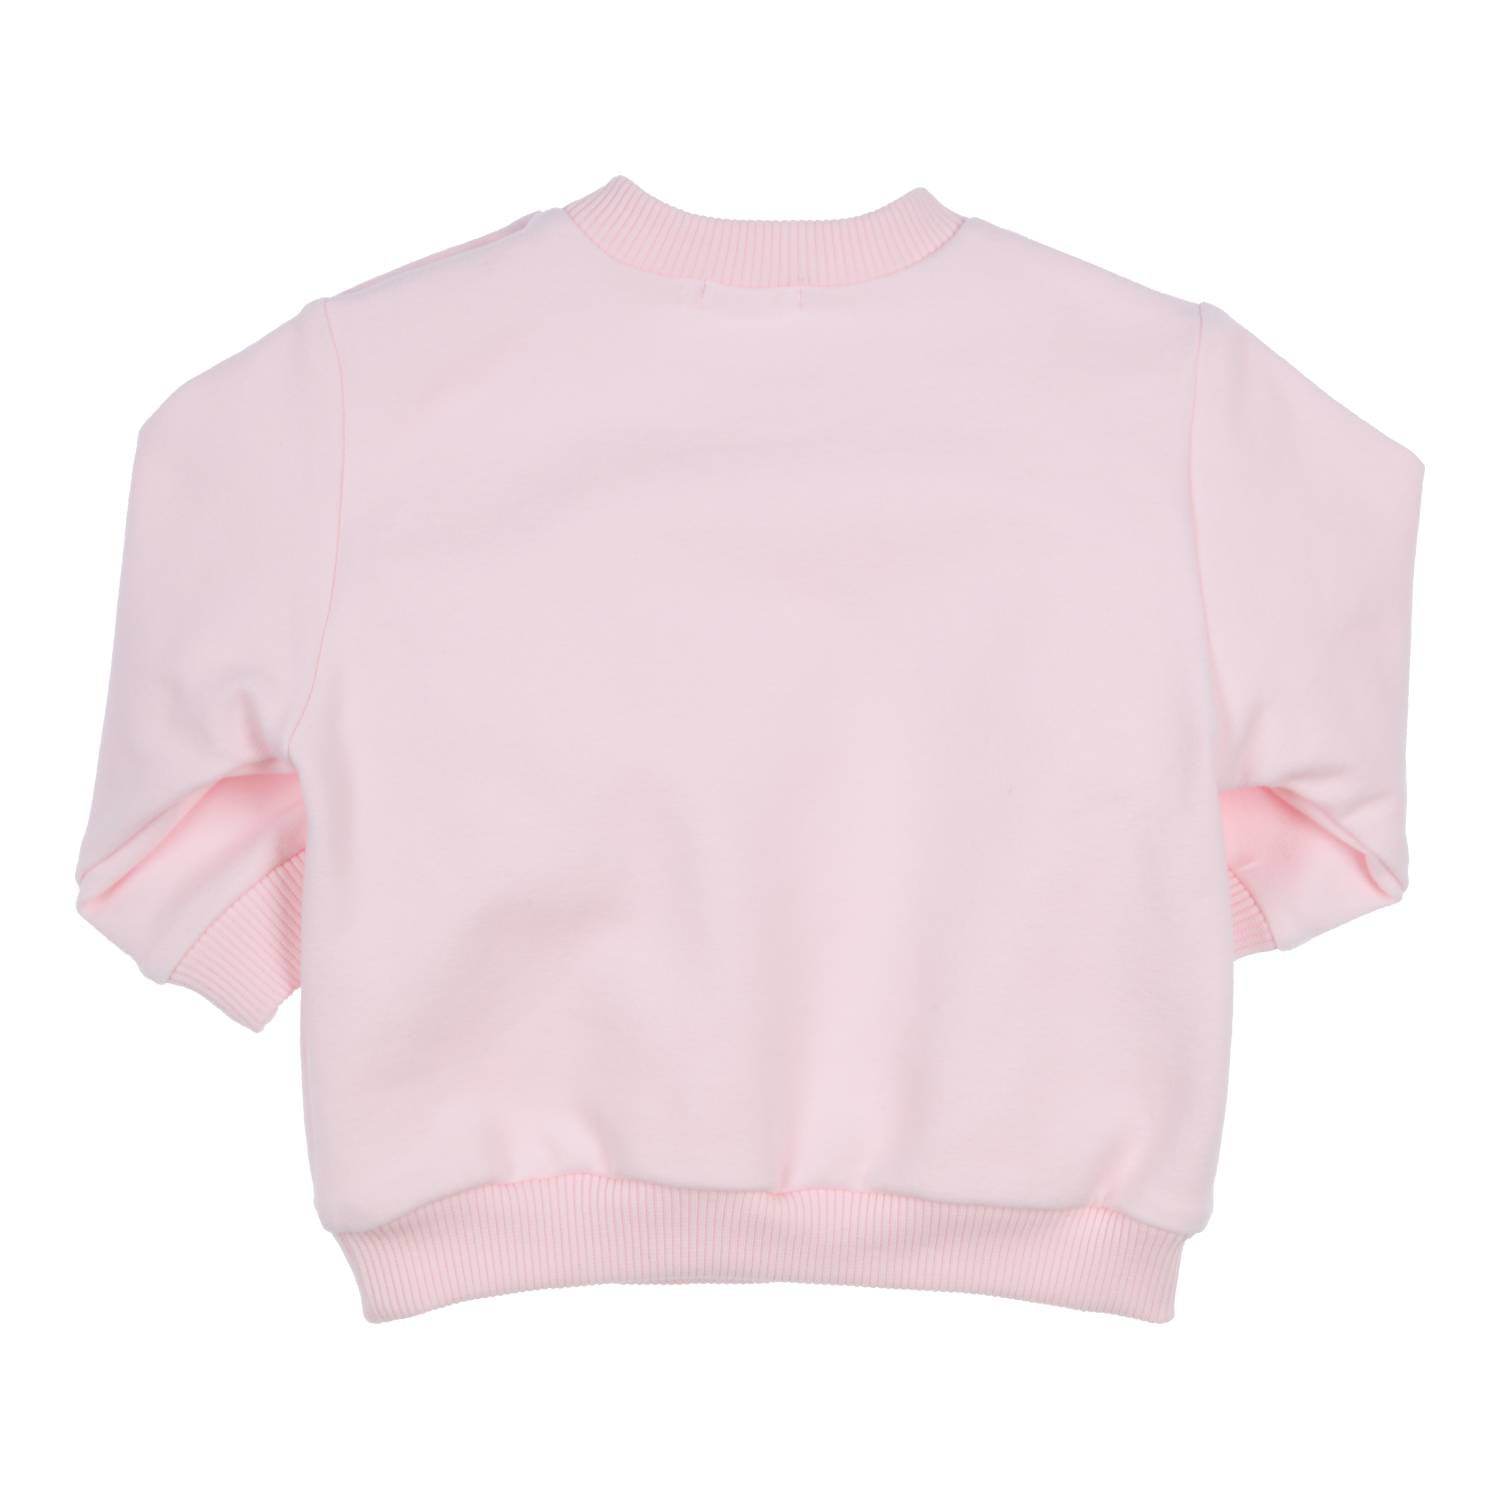 Meisjes Sweater Carbon van Gymp in de kleur Oudroze in maat 86.